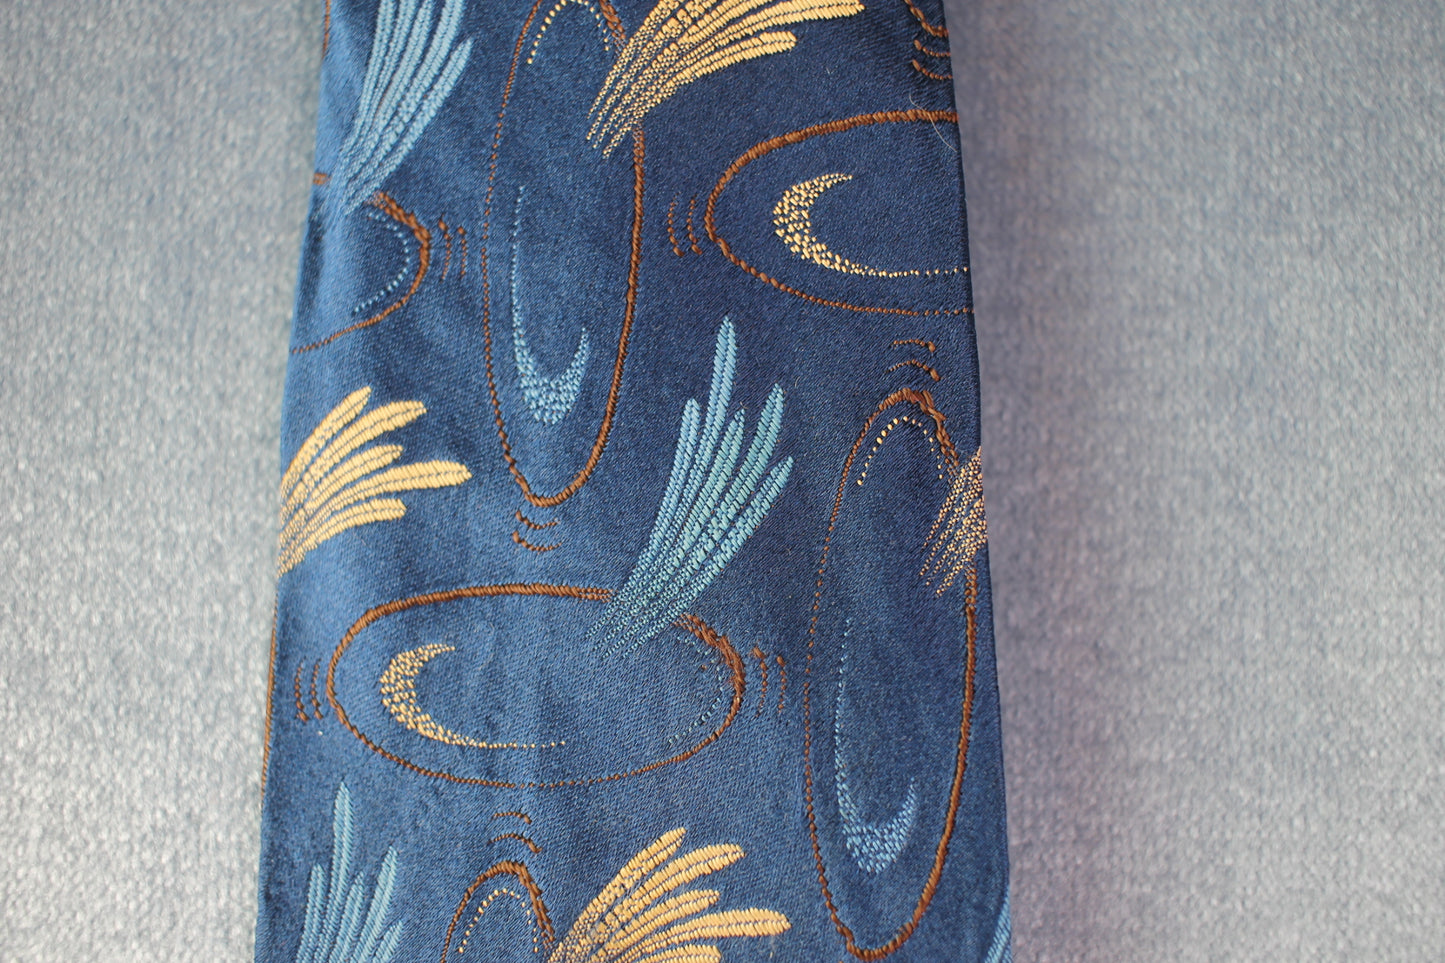 Vintage 1940s Rathbuns Hollywood blue gold copper pattern tie